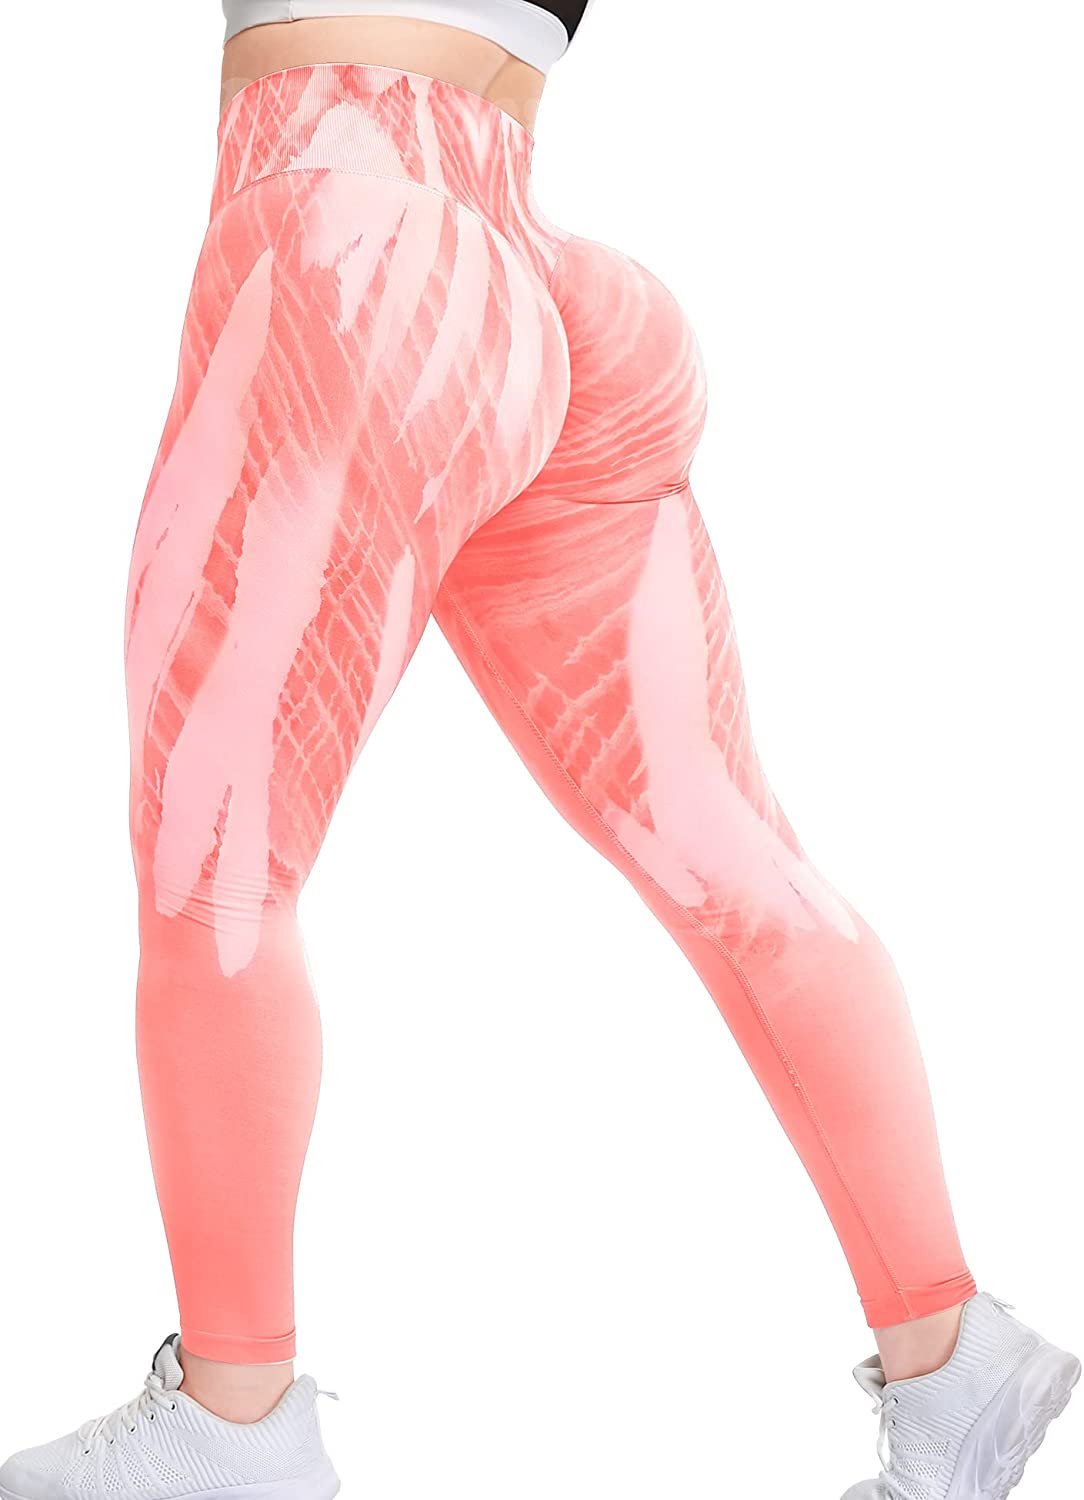 Buy VOYJOY Tie Dye Seamless Leggings for Women High Waist Yoga Pants, Scrunch  Butt Lifting Elastic Tights, #4 Black Gray, X-Small at